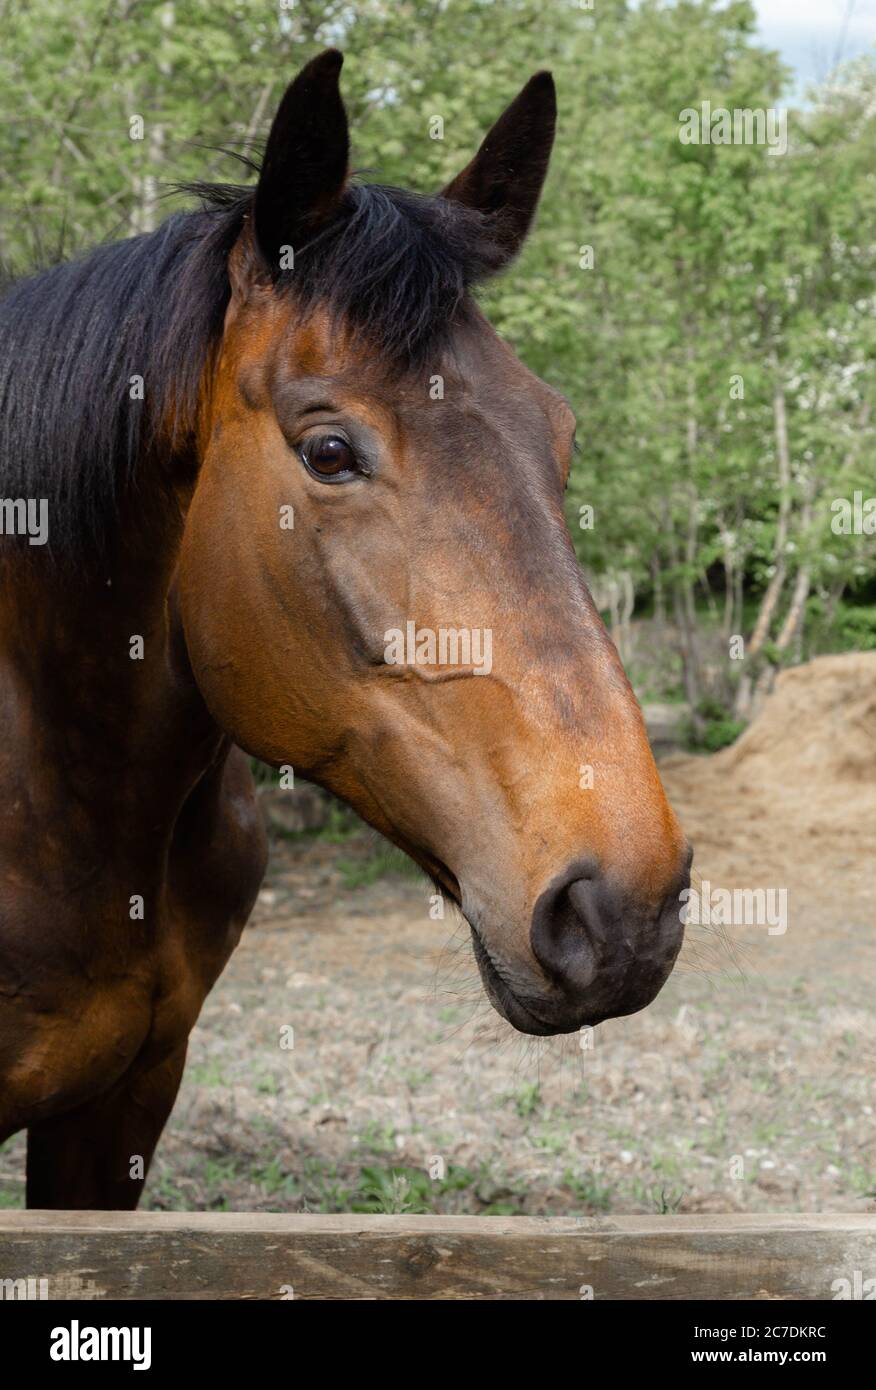 A horse head close up. Stock Photo